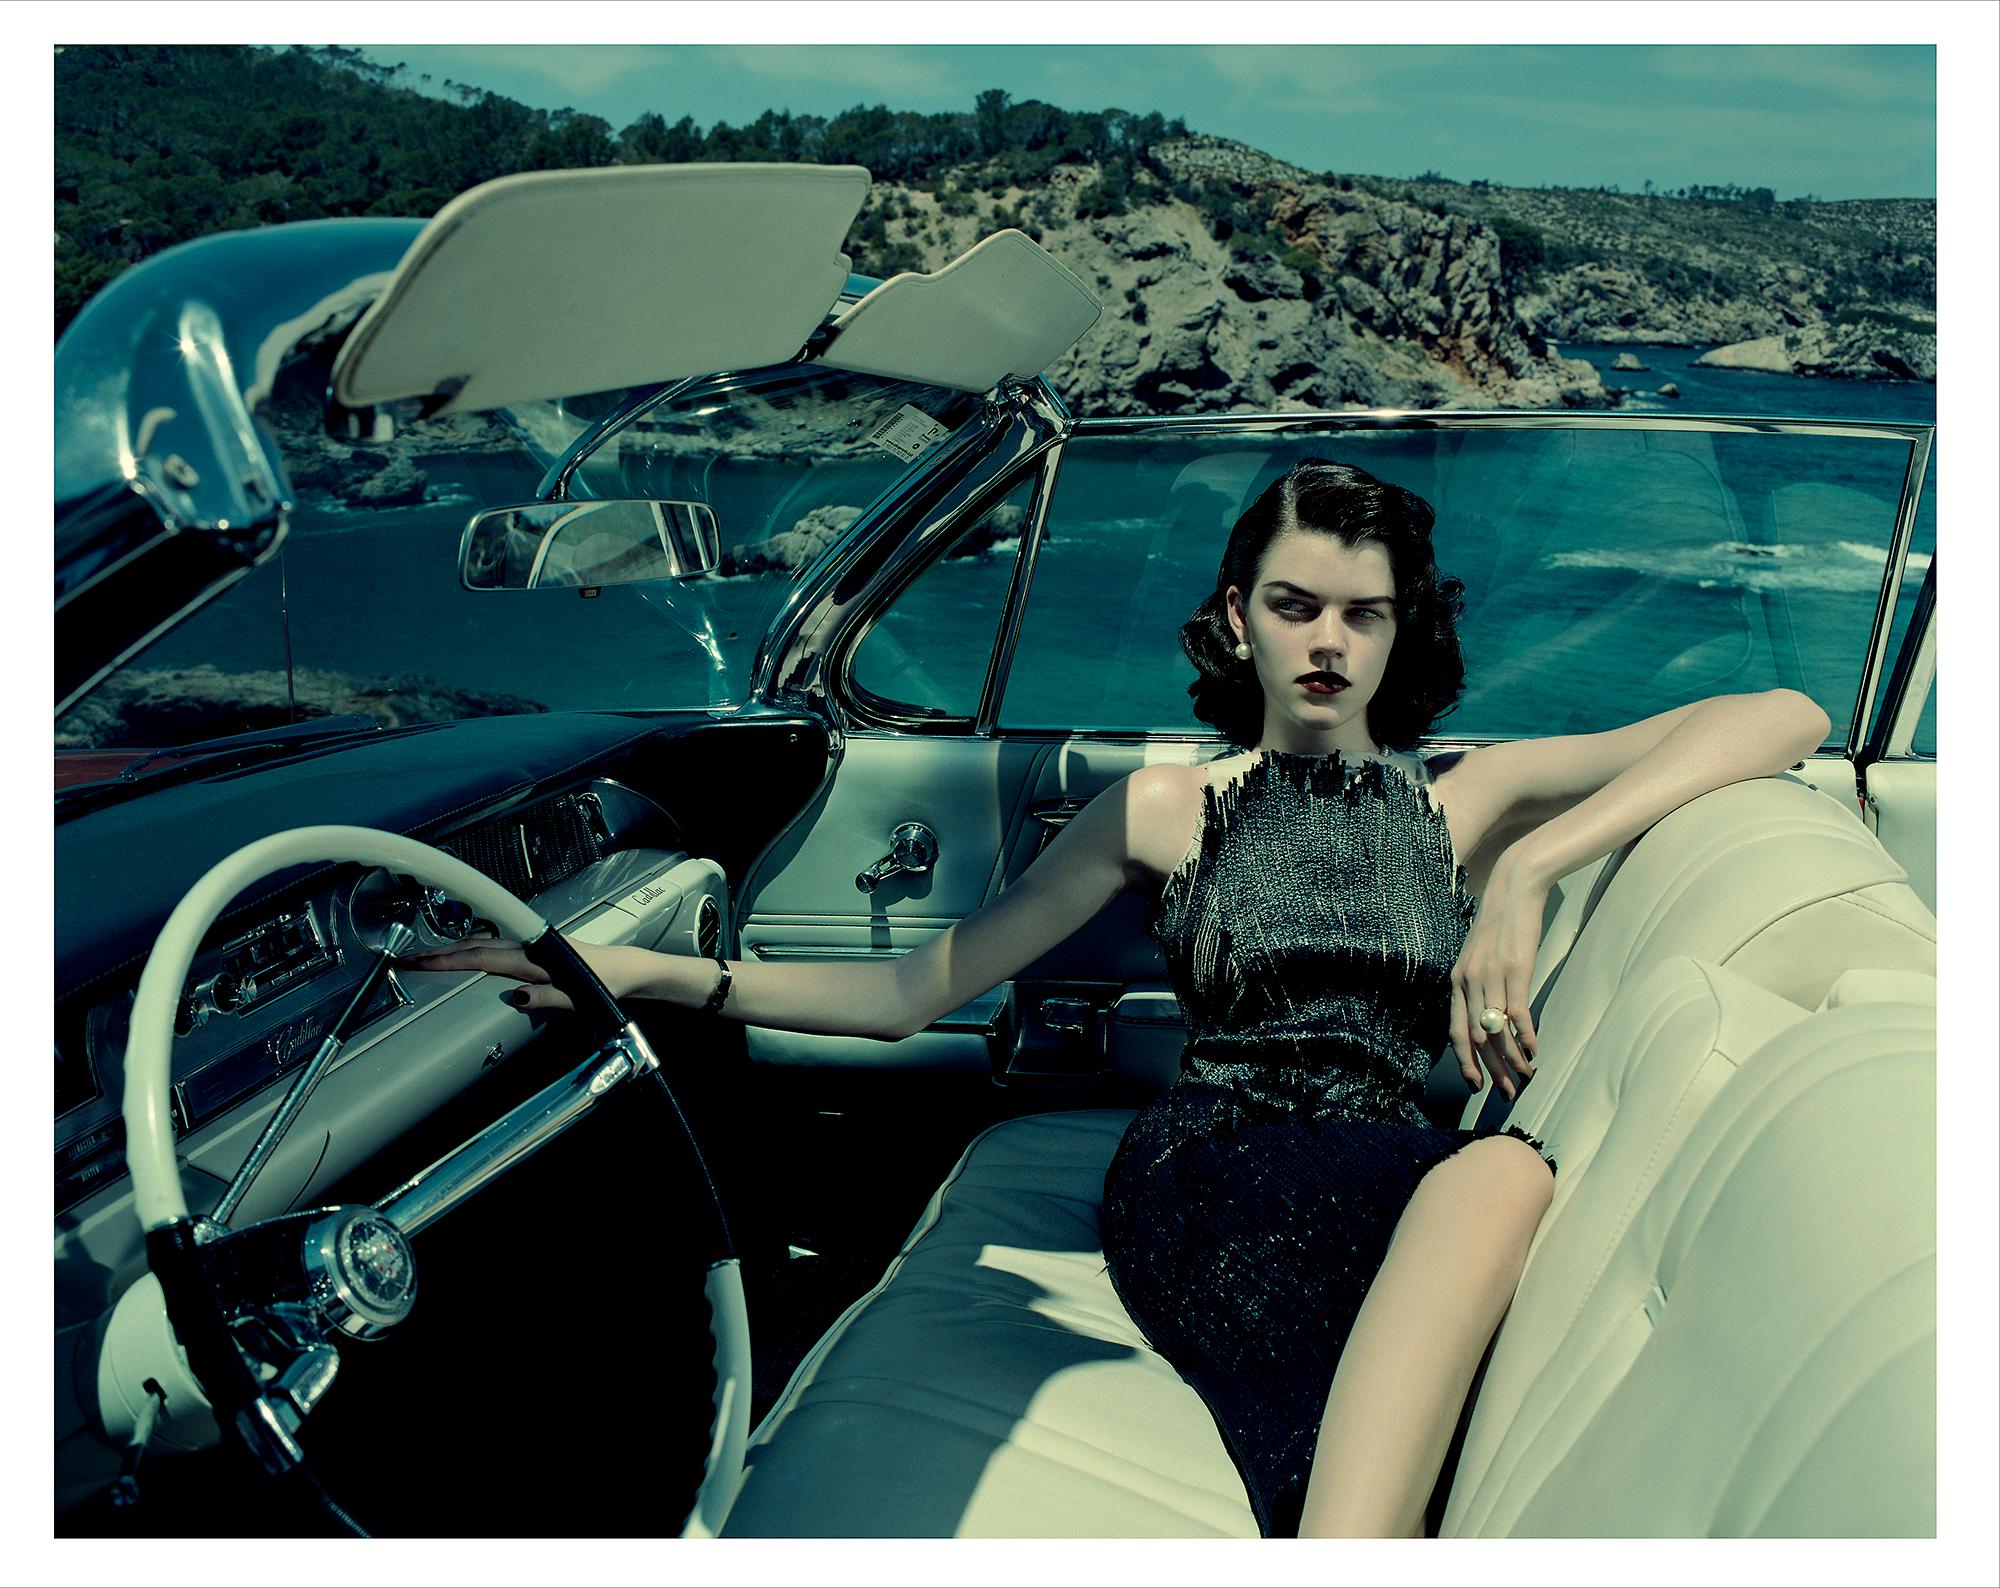 Blue Cadillac Antonia, Balearic Islands, contemporary, photography